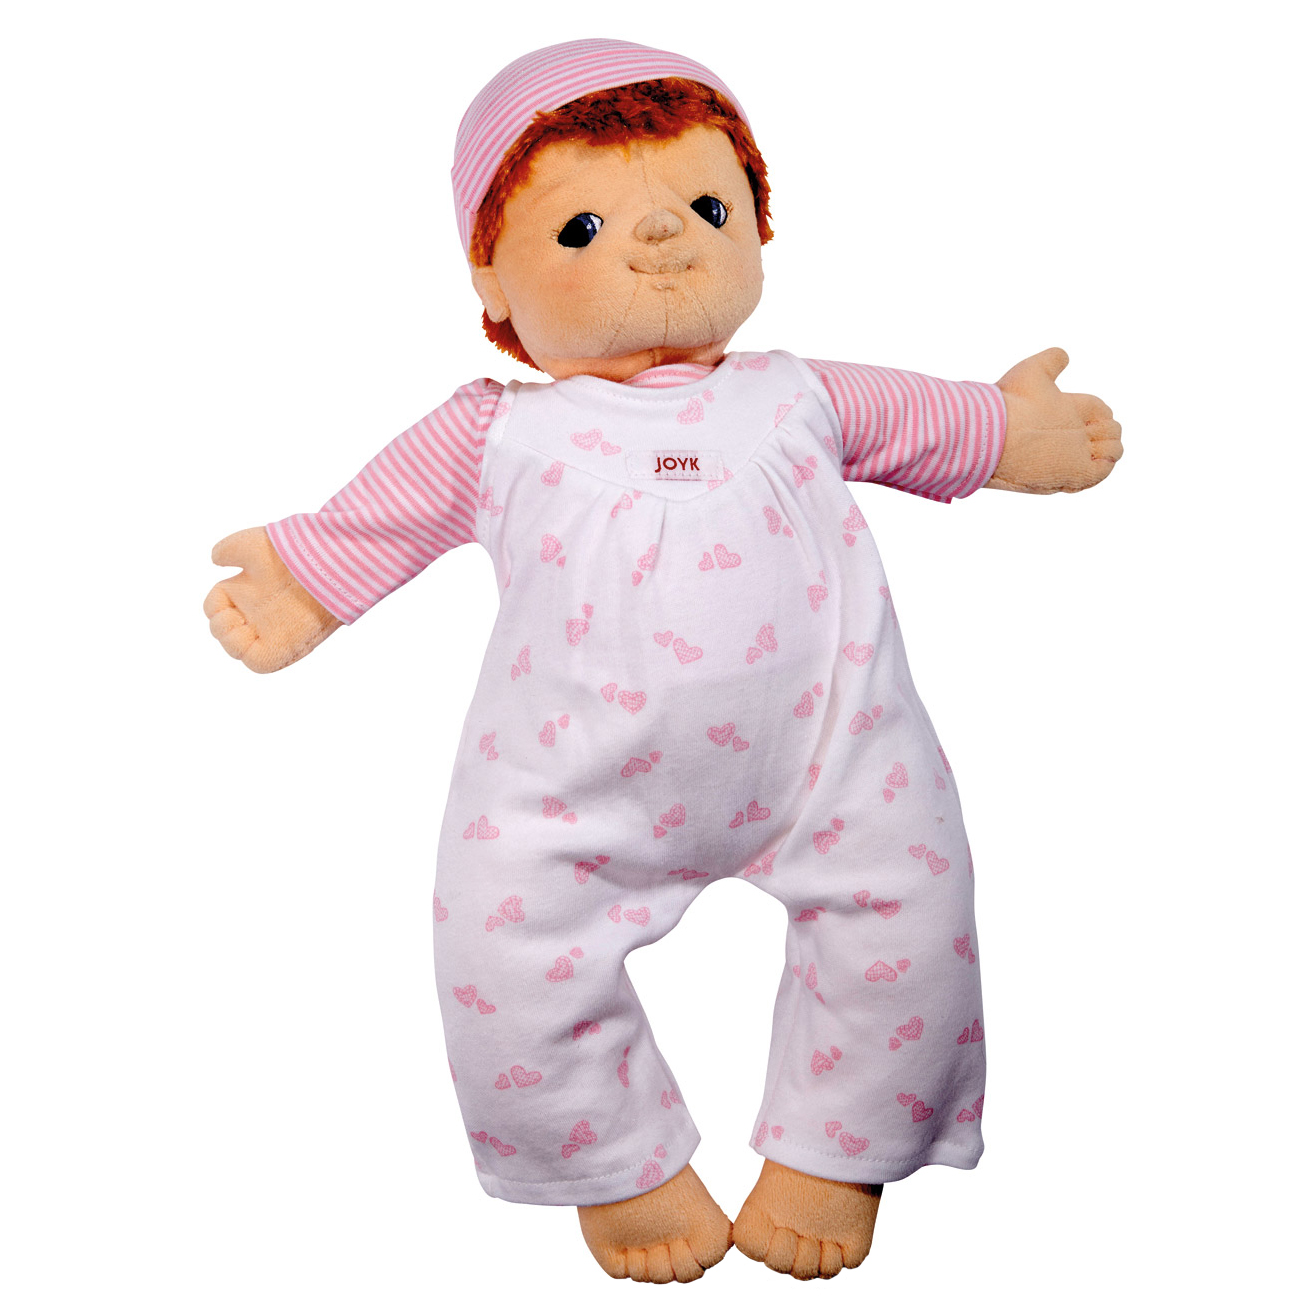 Joyk dolls - empathy doll baby Emma